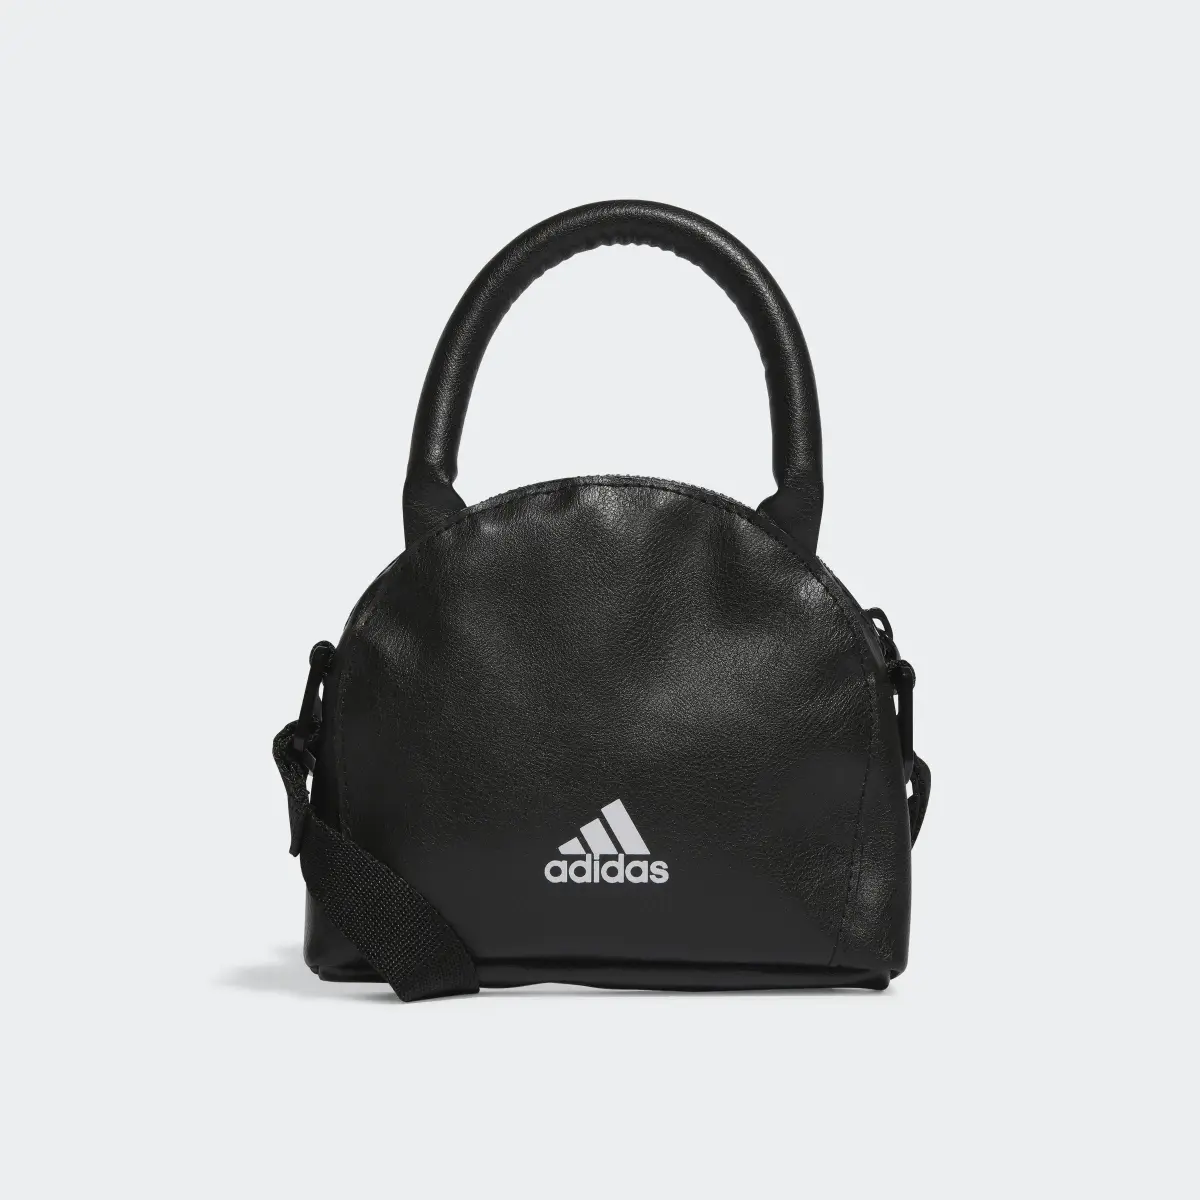 Adidas Unisex PU Kettle Bag. 2